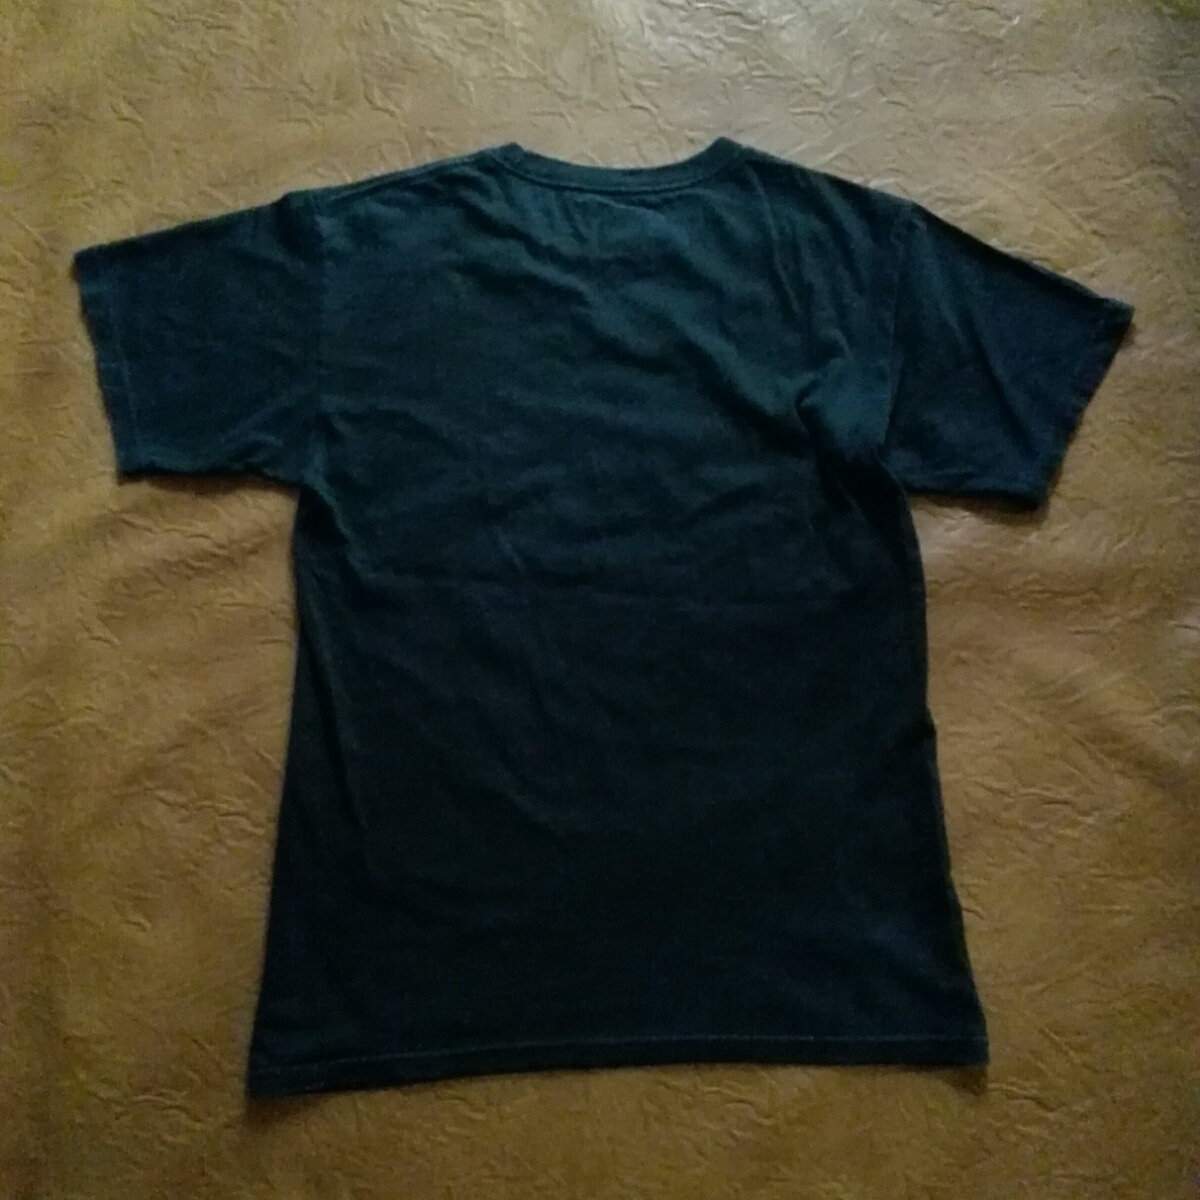 BONFIREbon fire - Logo print T-shirt black S size USA made Tee